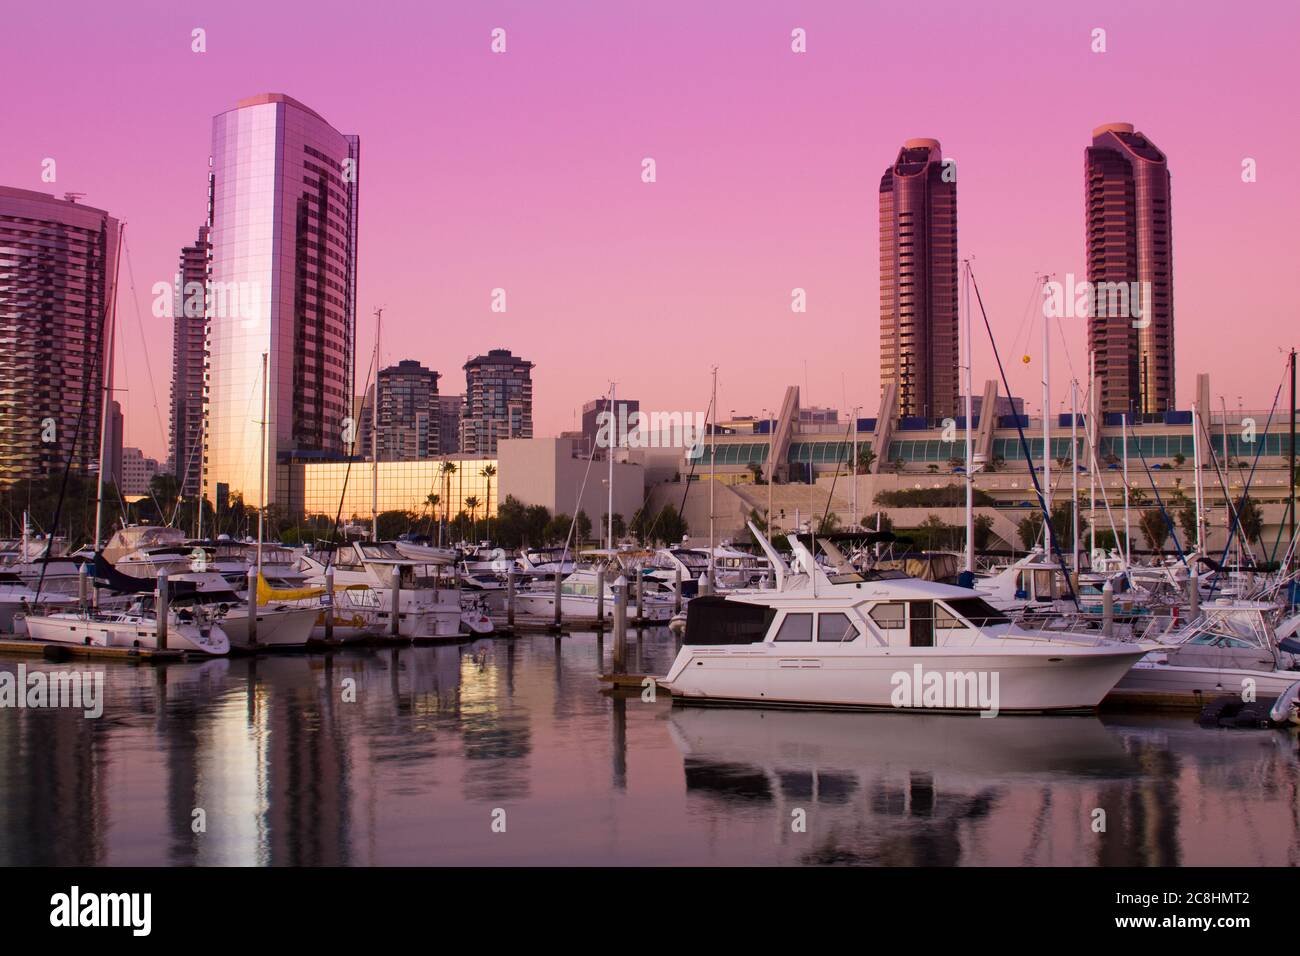 Marriott Hotel, Harbor Club Towers & Embarcadero Marina, San Diego, California, USA Stock Photo